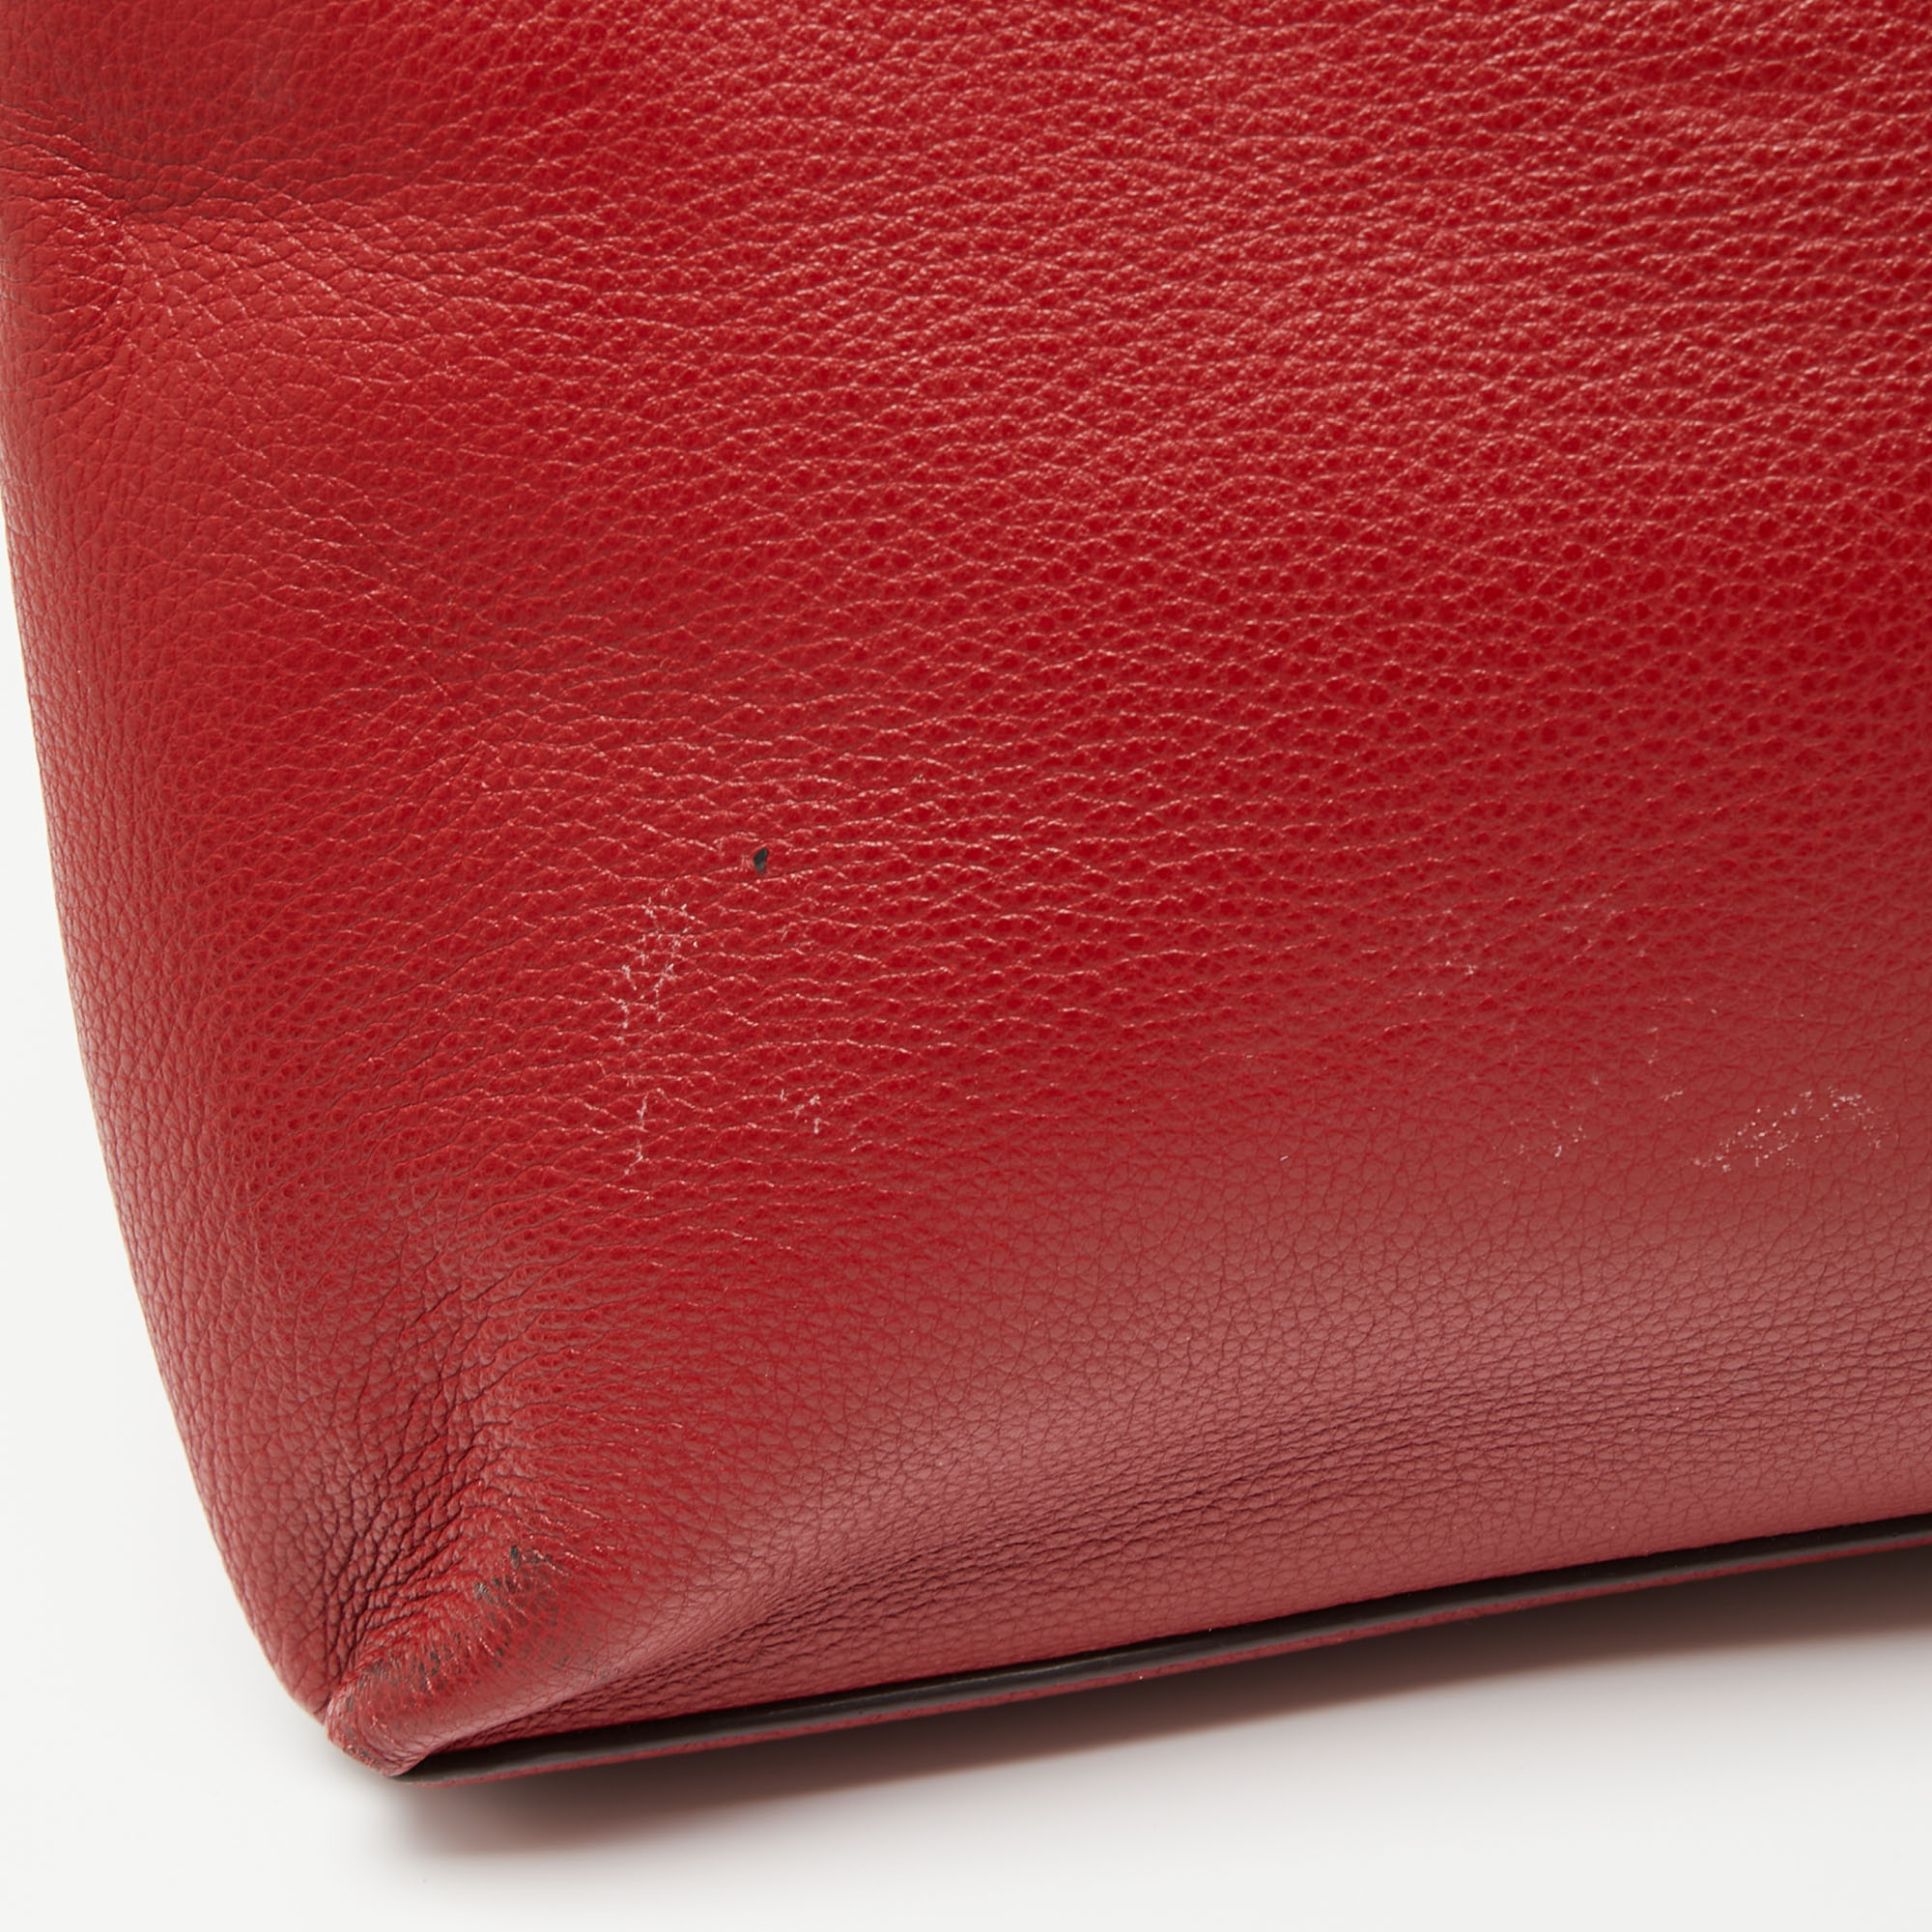 DKNY Red Leather Bryant Park Front Pocket Satchel